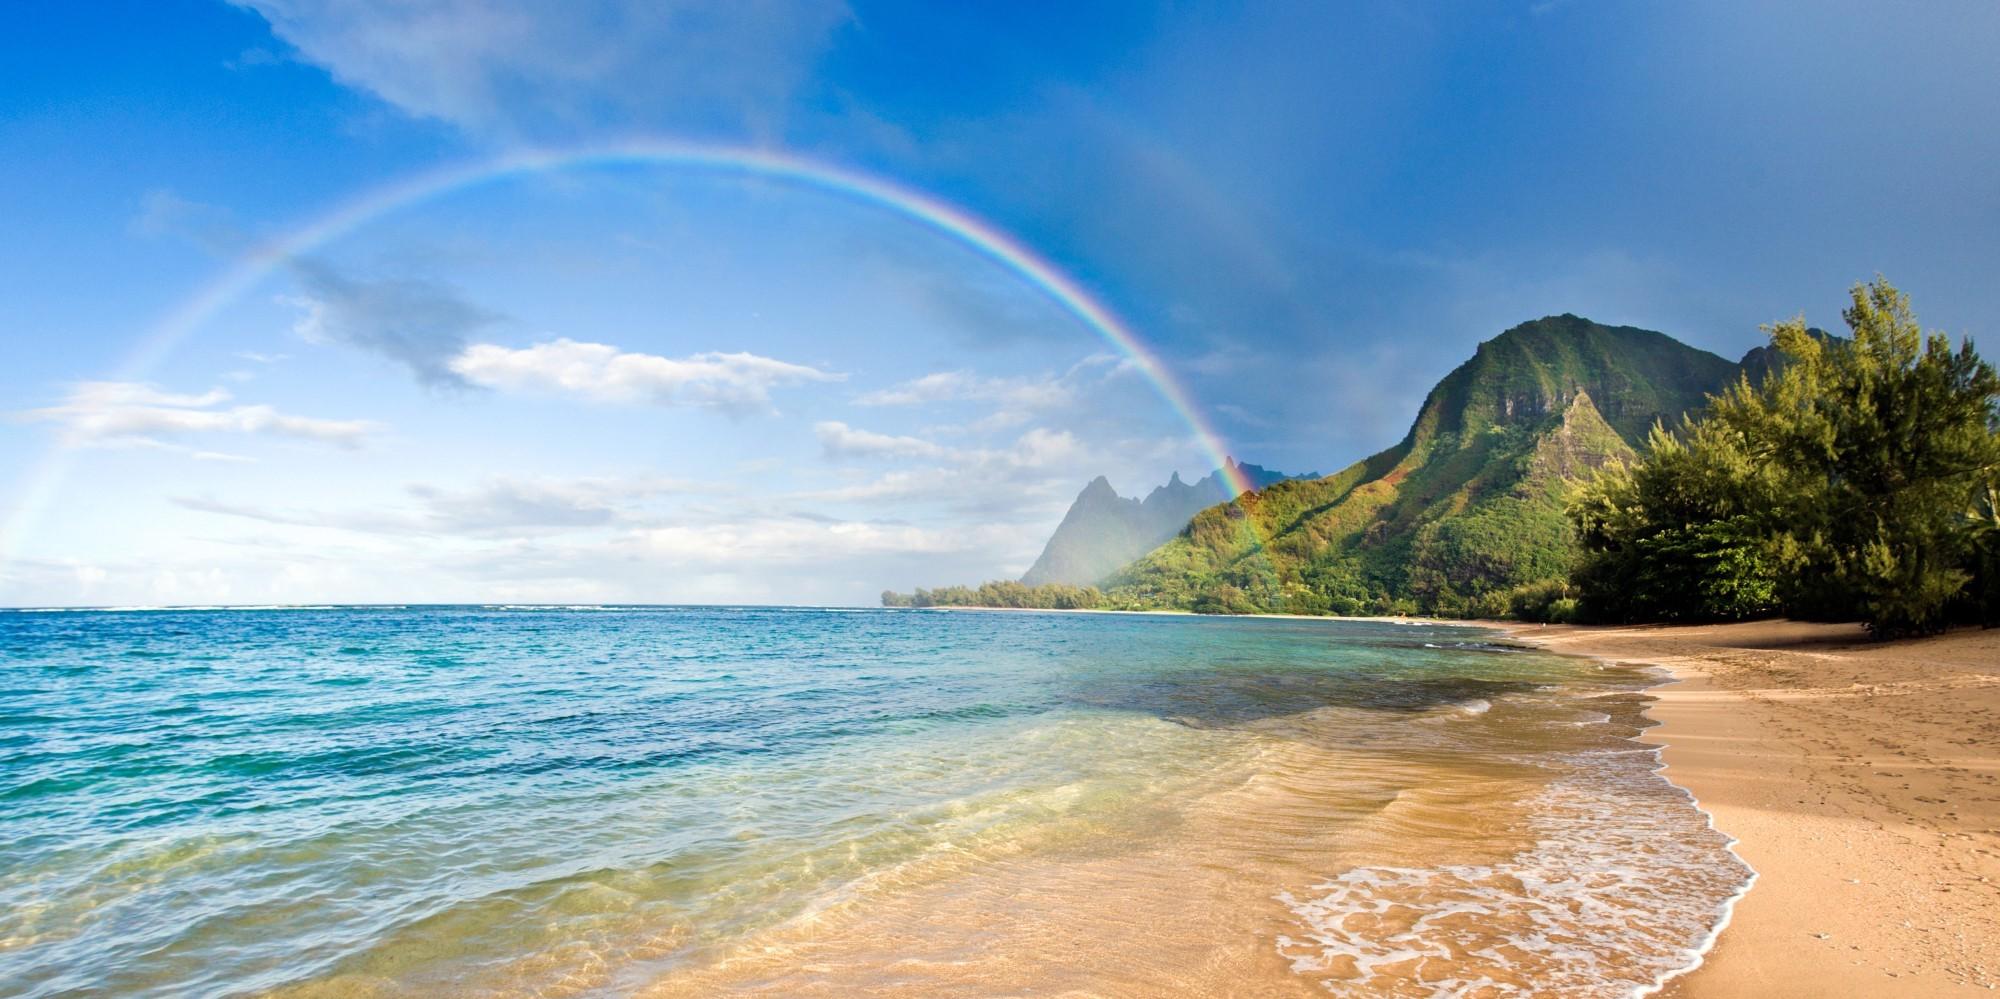 Beach Rainbows Sea Mountain Trees Sand Hawaii Island Clouds